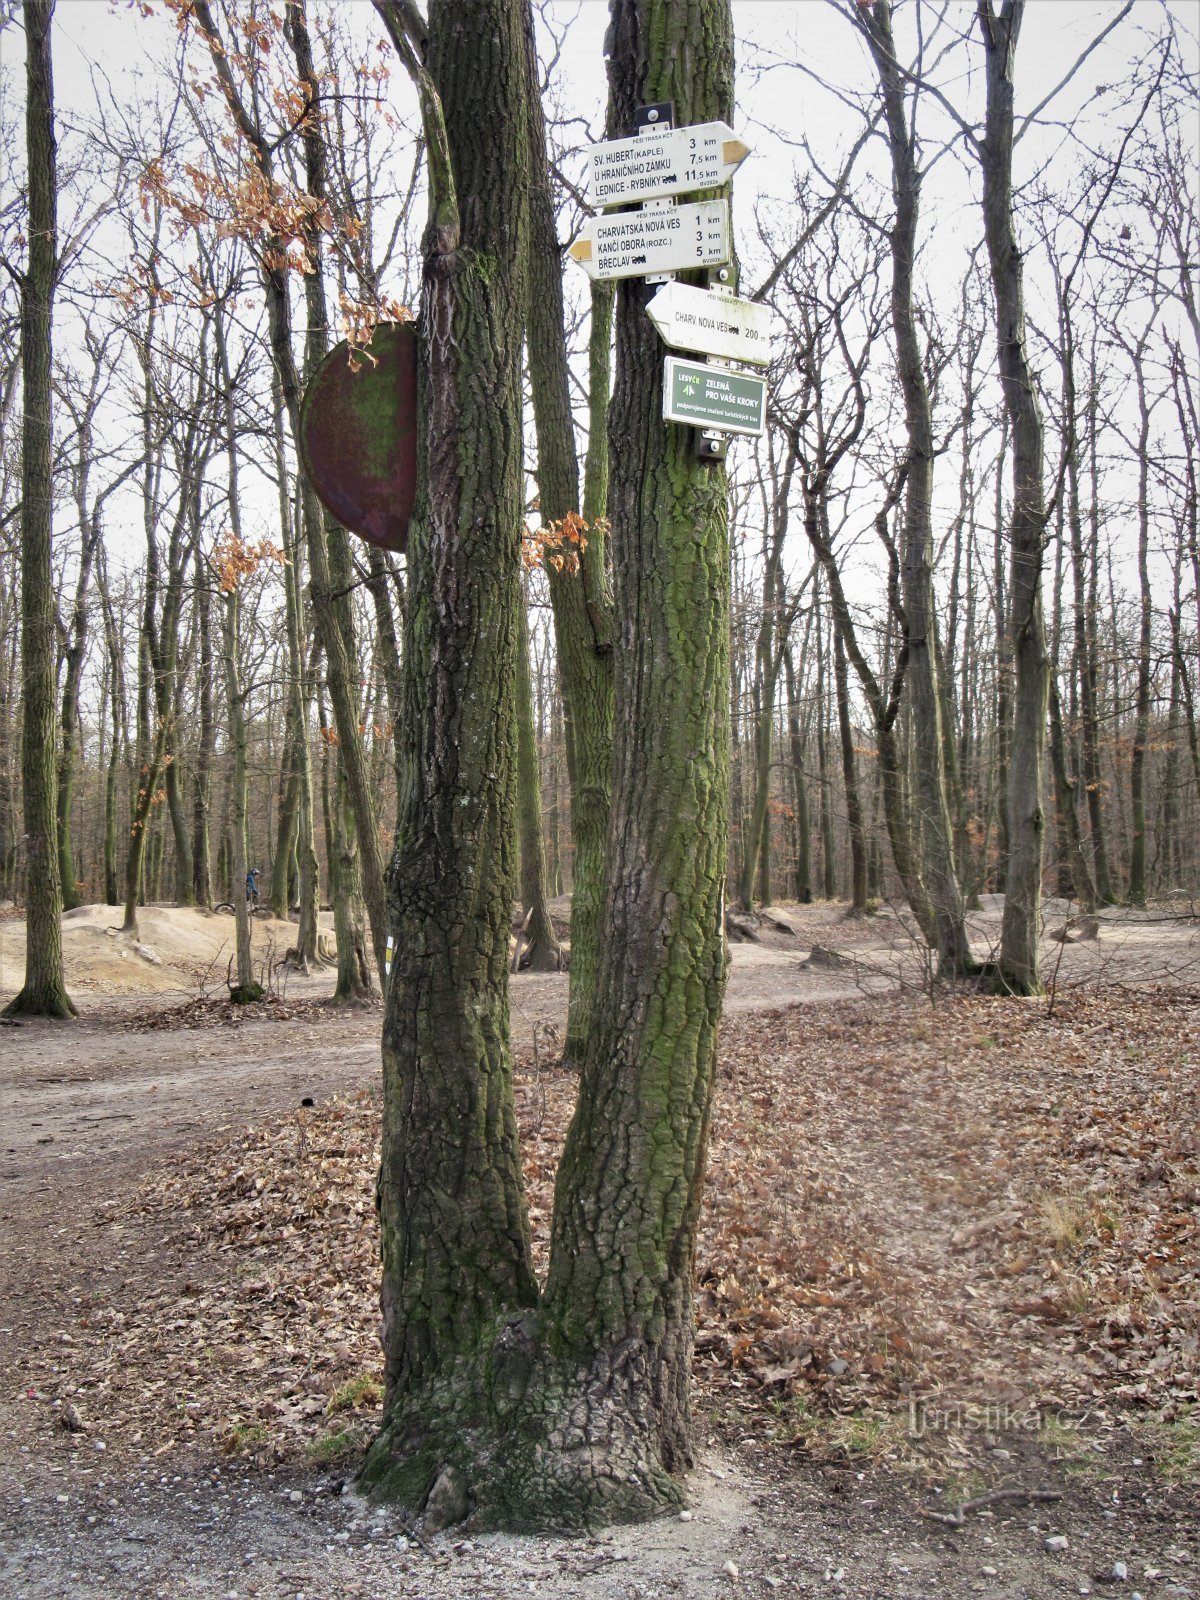 A encruzilhada turística Charvátská Nová Ves, linha ferroviária, está localizada na orla da floresta